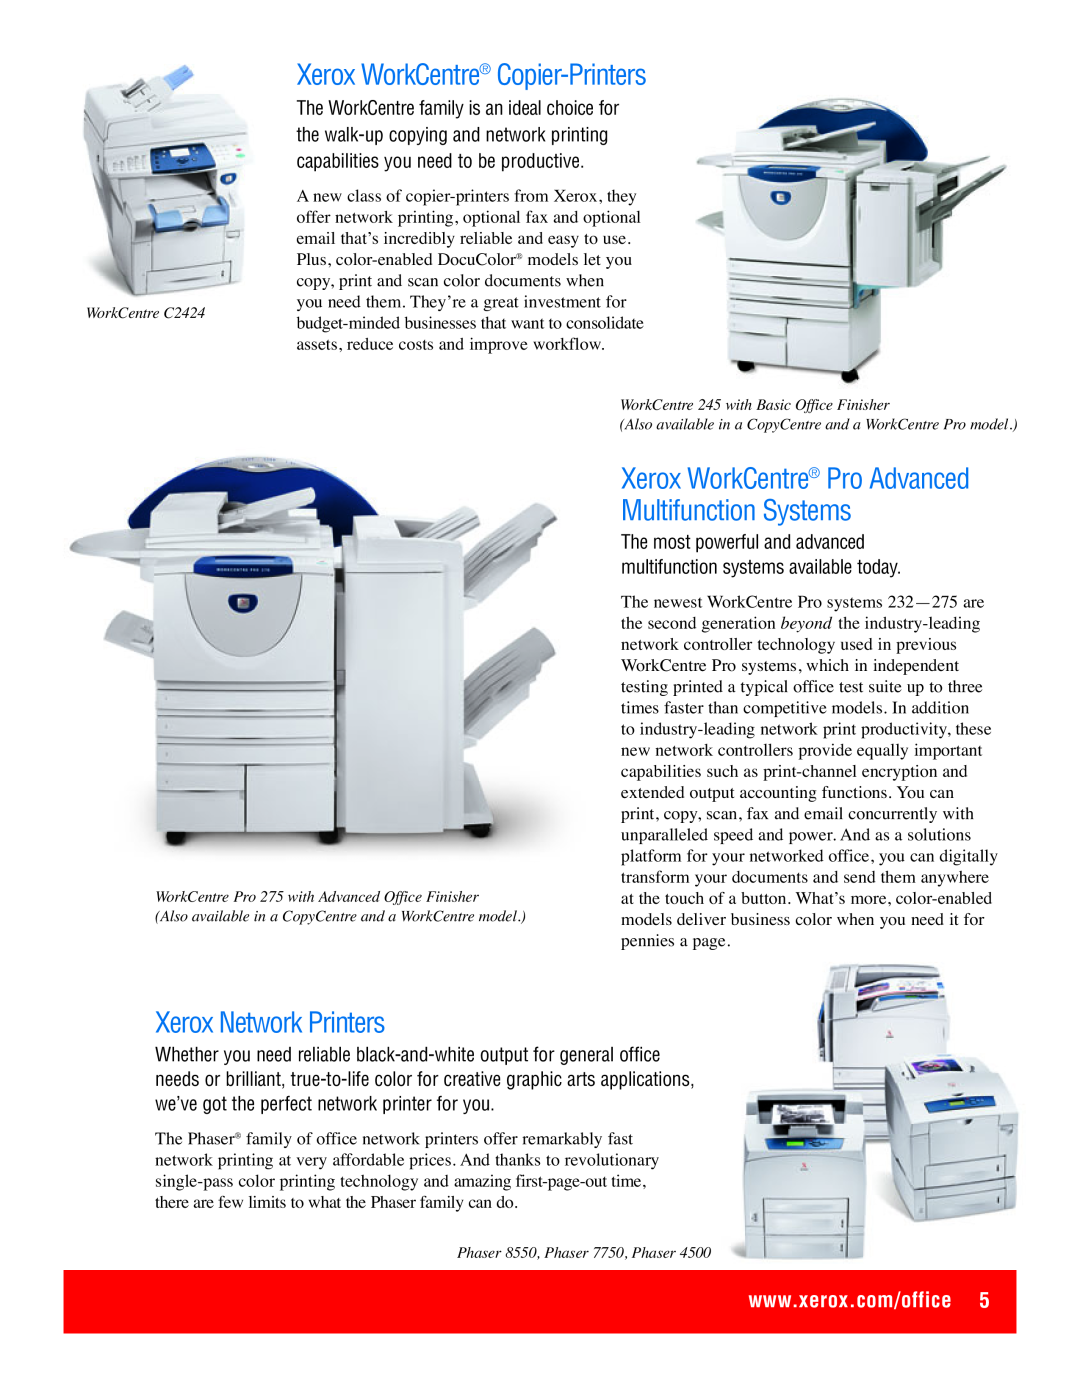 Xerox 275 Xerox WorkCentre Copier-Printers, Xerox Network Printers, WorkCentre C2424, Phaser 8550, Phaser 7750, Phaser 